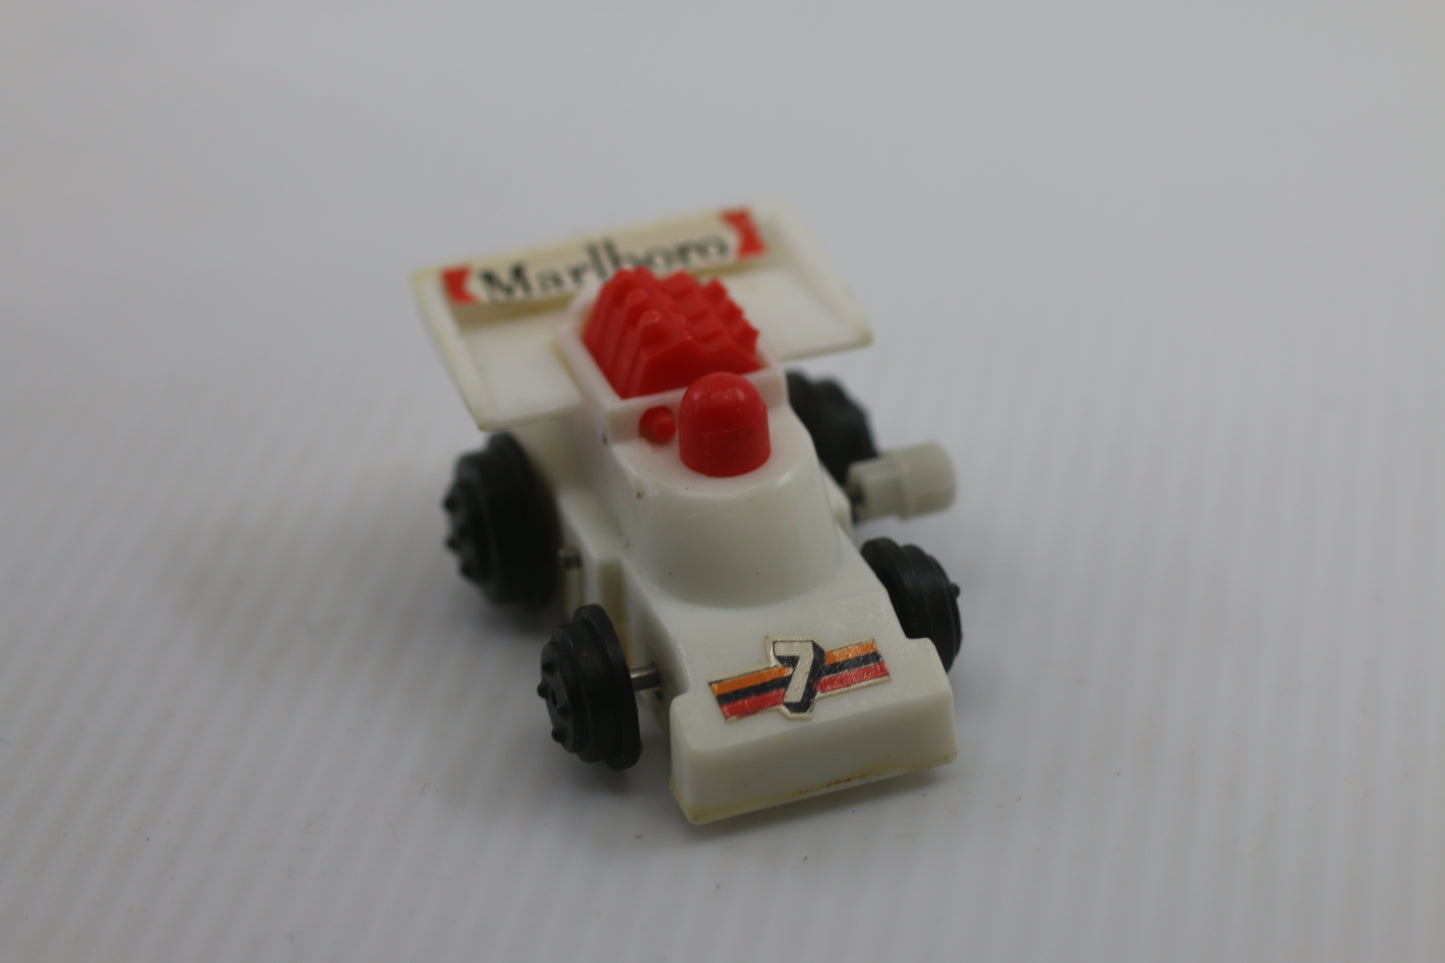 Antique Marlboro F1 Formula One Toy Race Car - Tested & Works - Windup - 70s